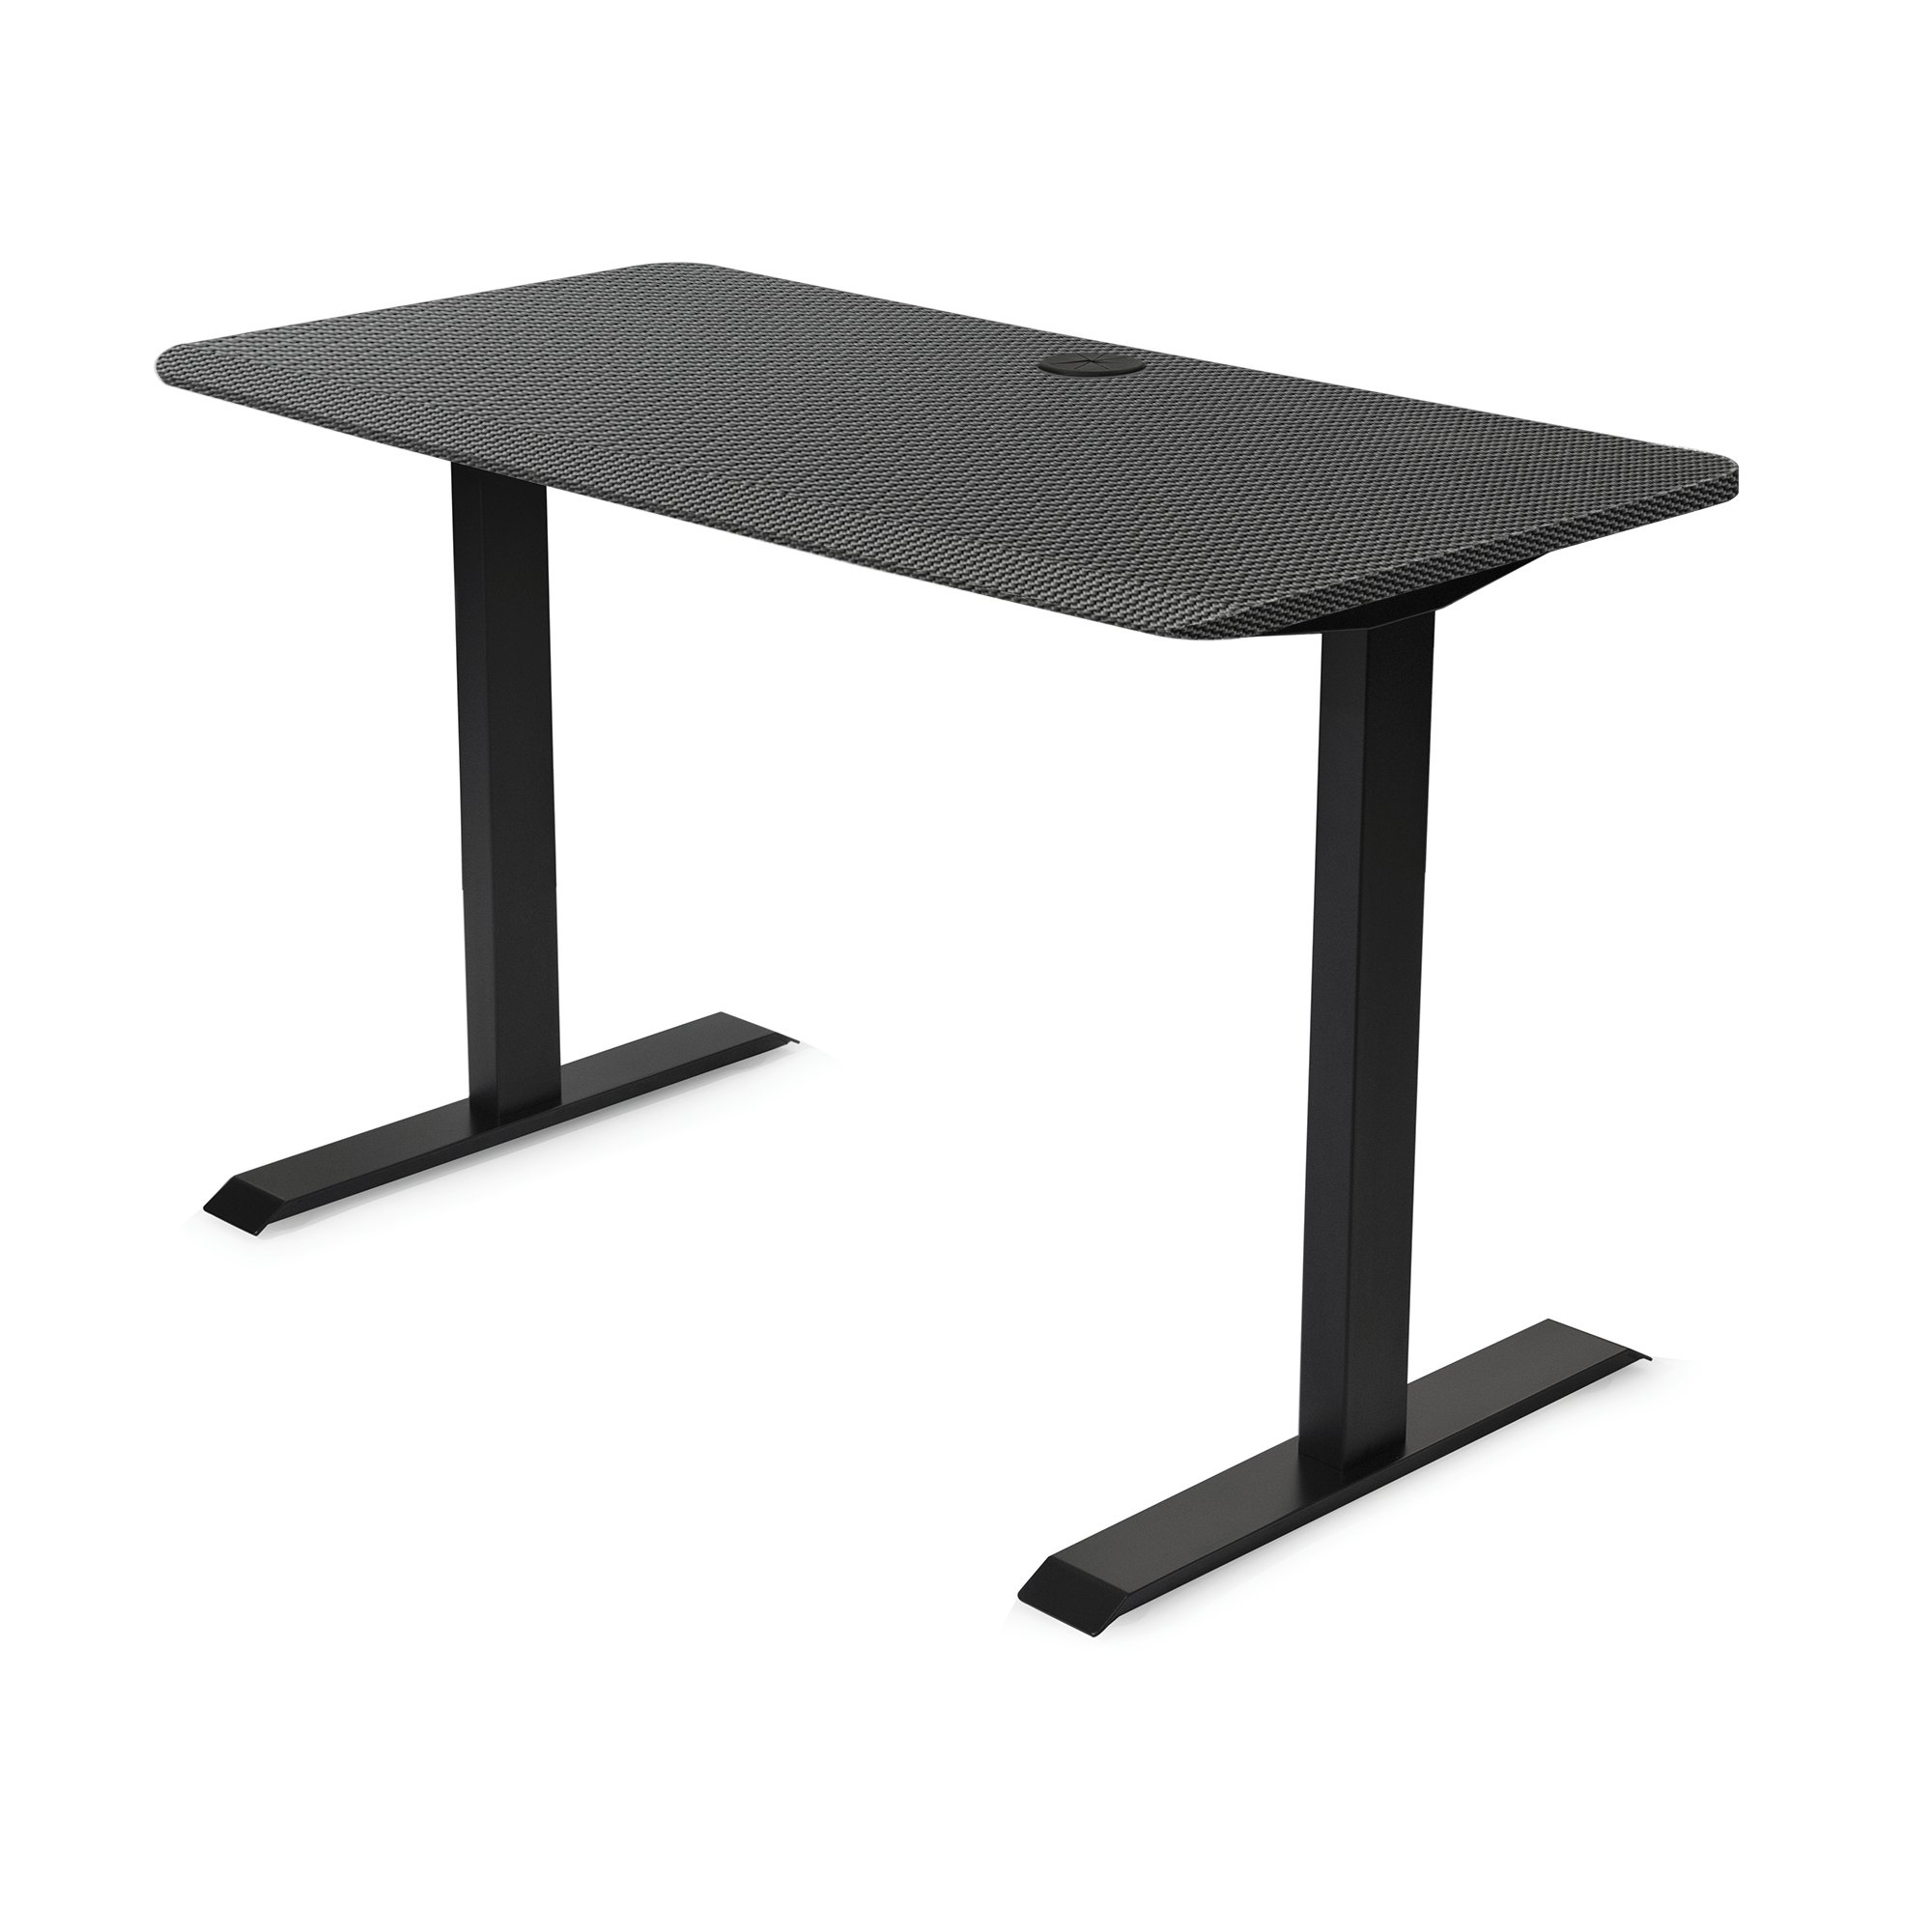 48x24 Side Table Fixed Height - Frame Color: Gray - Desktop Color: Carbon Fiber